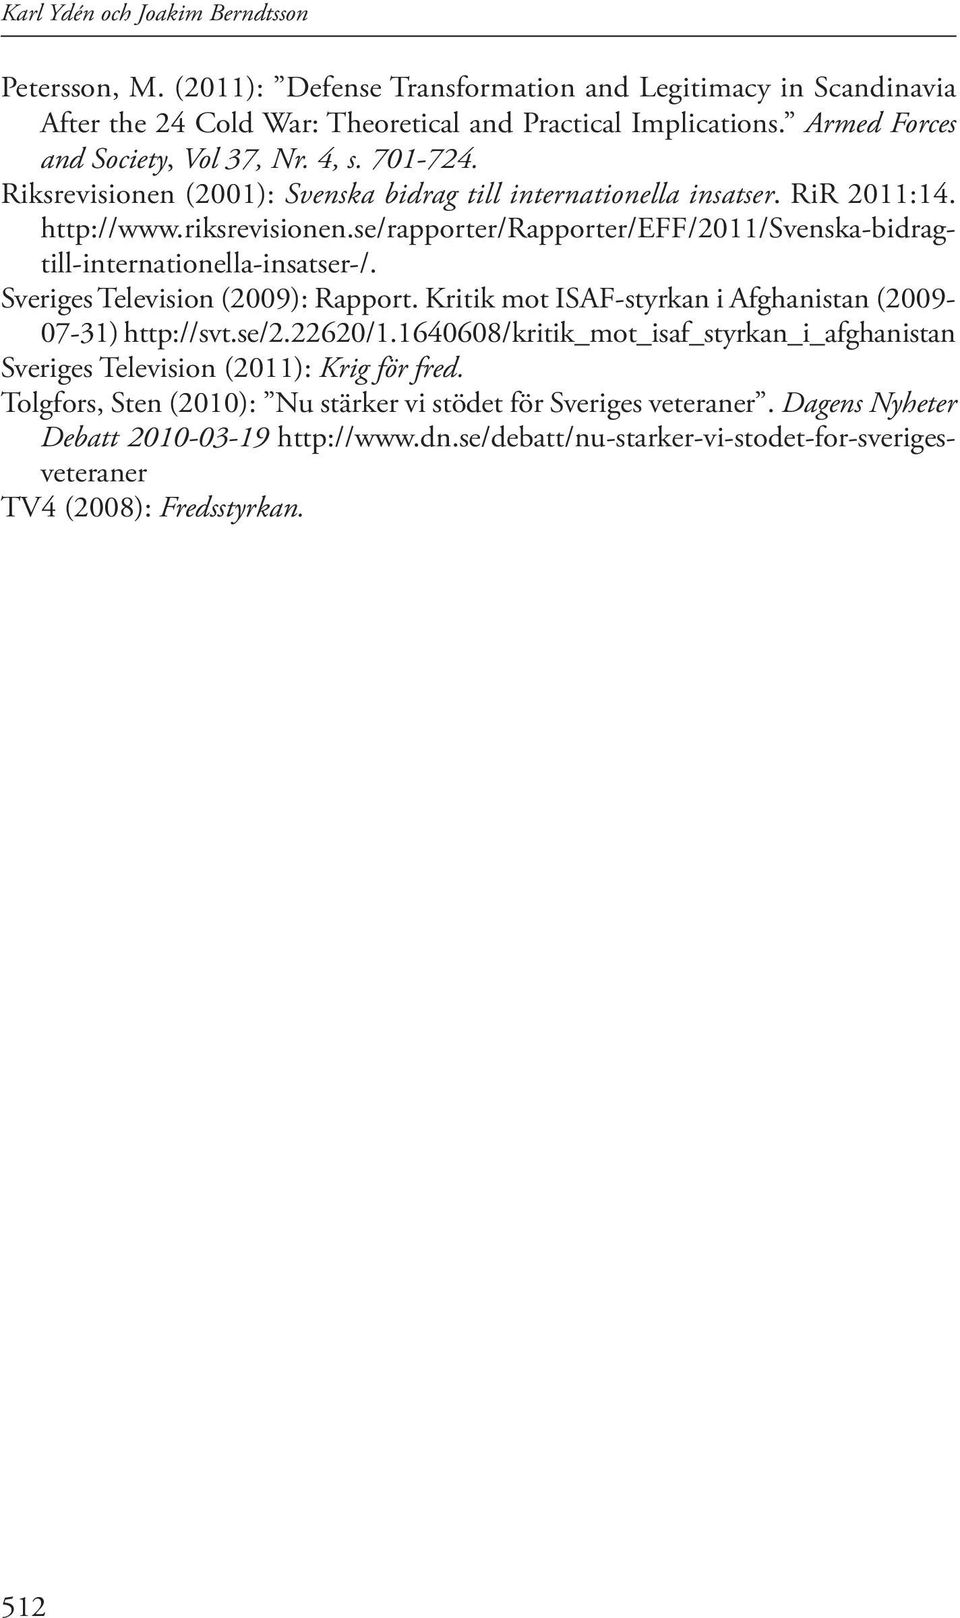 se/rapporter/rapporter/eff/2011/svenska-bidragtill-internationella-insatser-/. Sveriges Television (2009): Rapport. Kritik mot ISAF-styrkan i Afghanistan (2009-07-31) http://svt.se/2.22620/1.